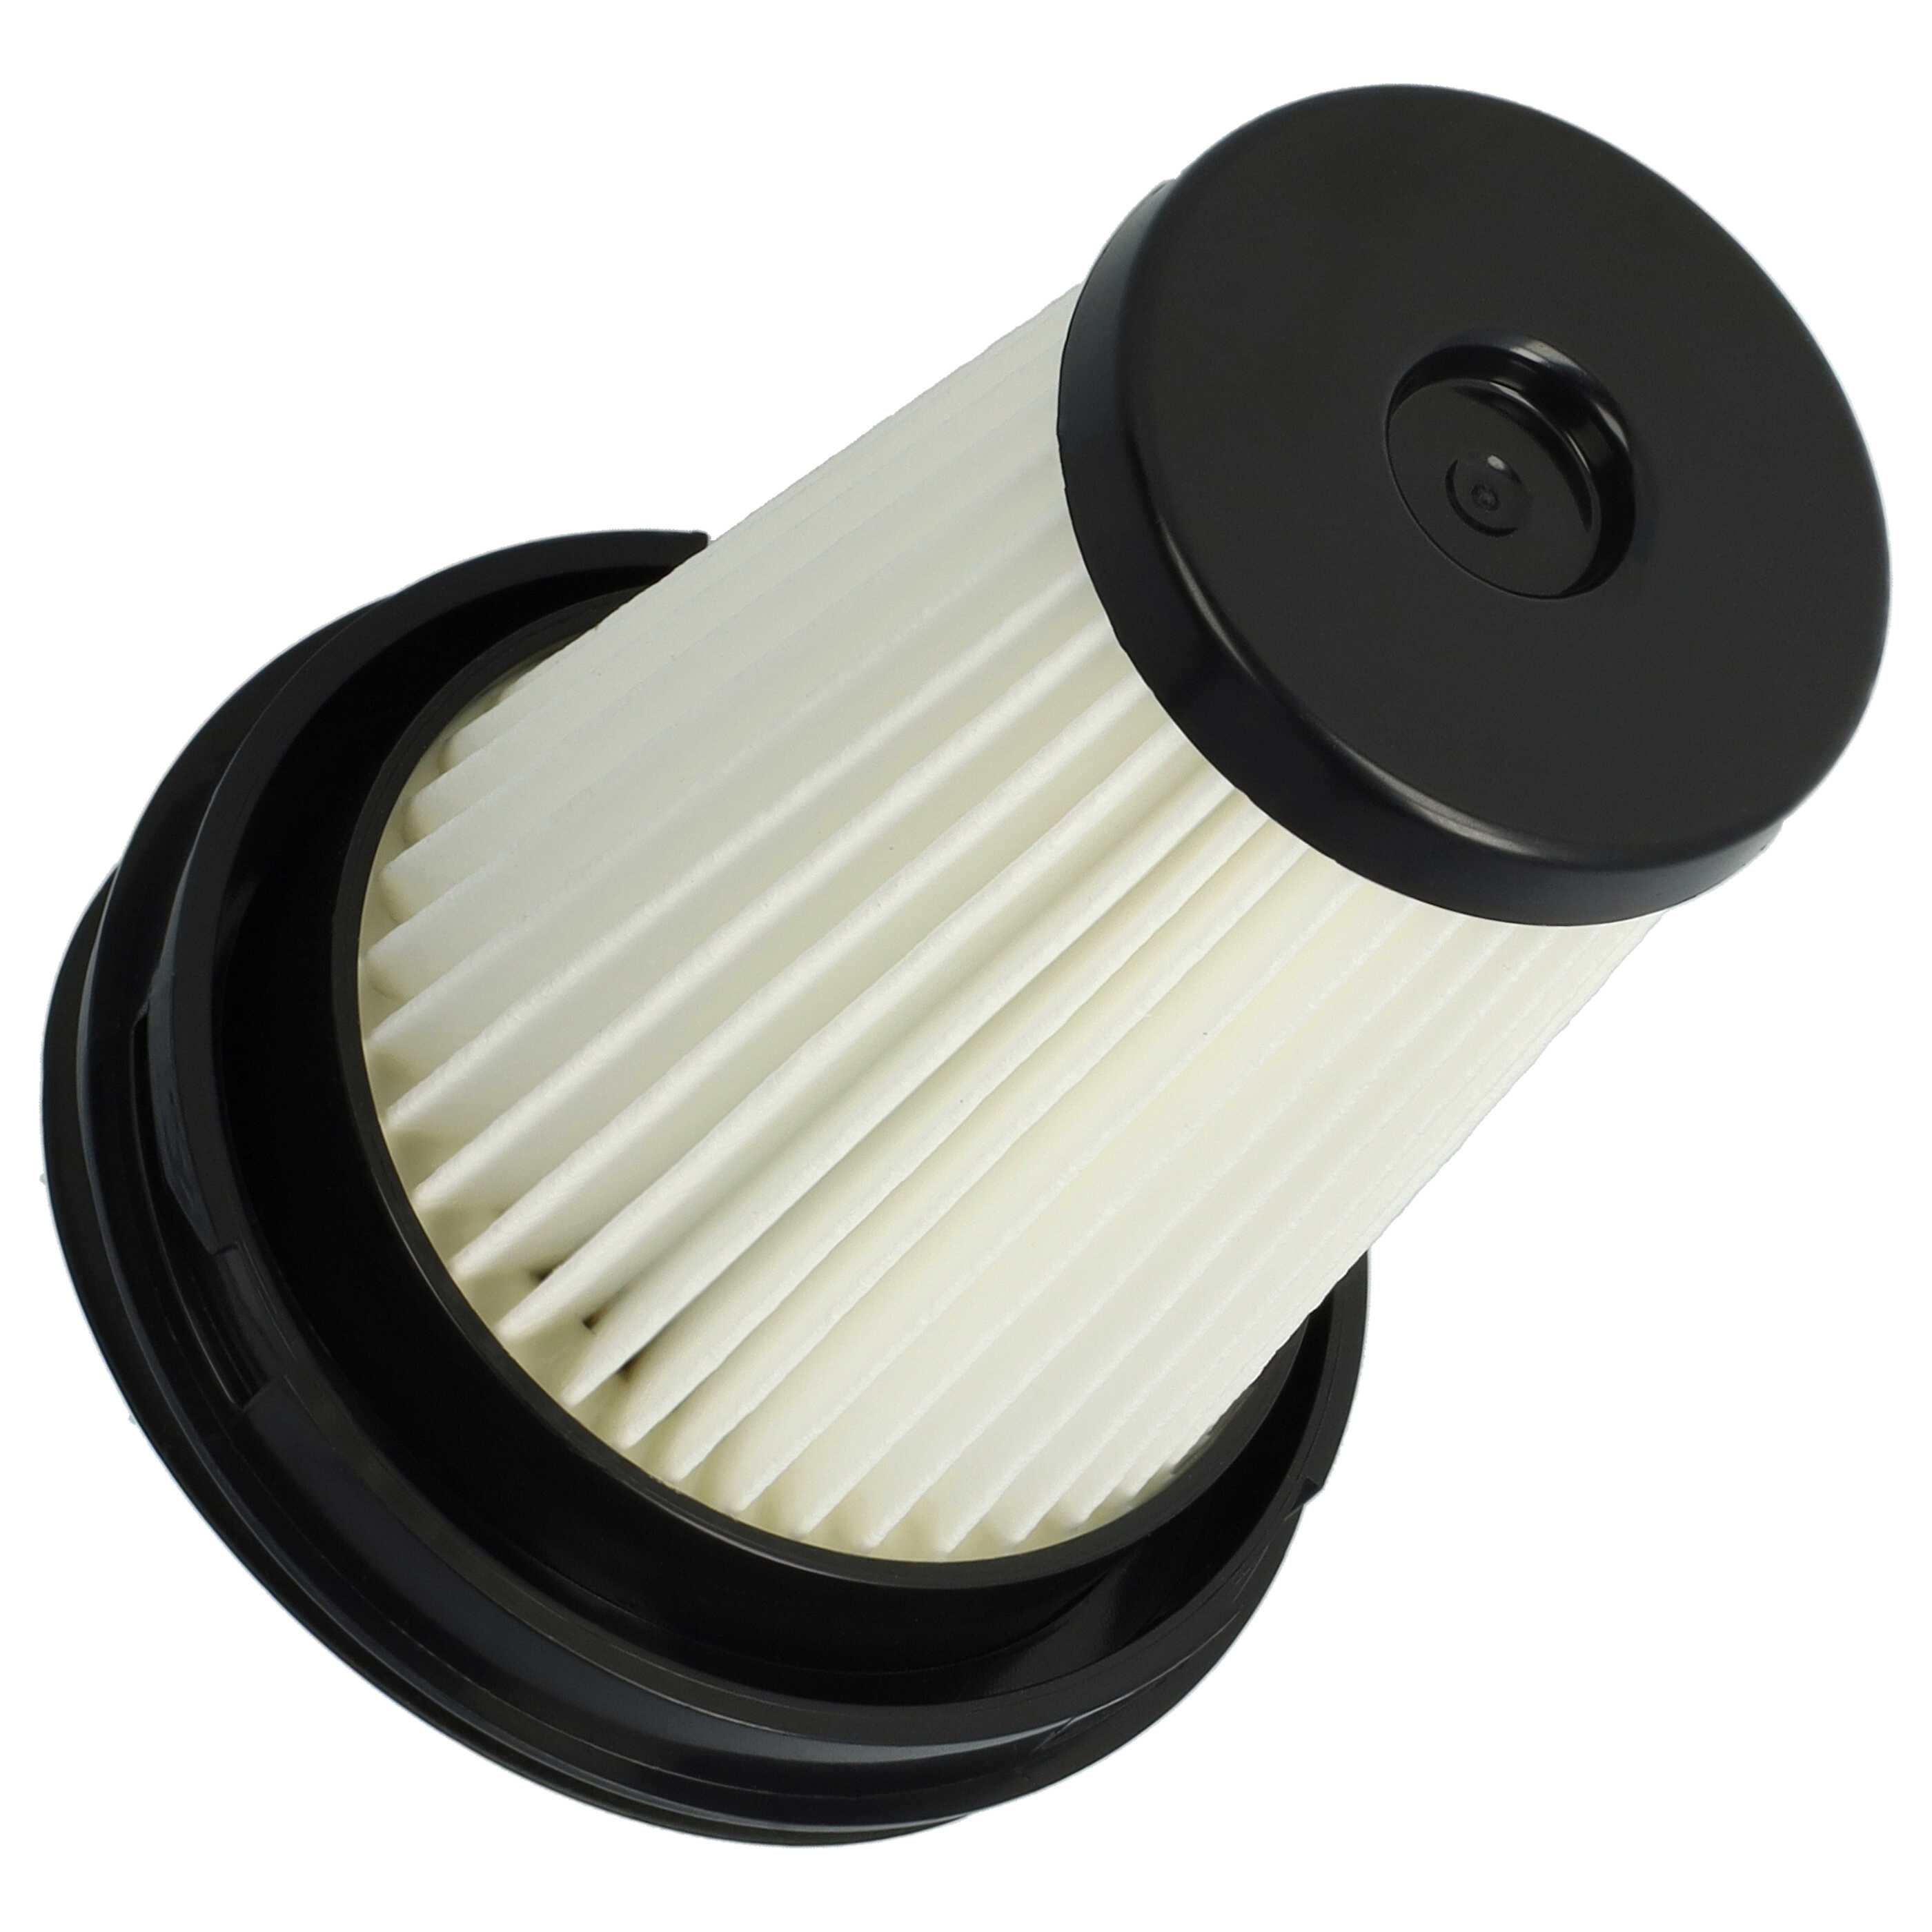 1x cartridge filter replaces Grundig 9178008590 for Arcelik Vacuum Cleaner